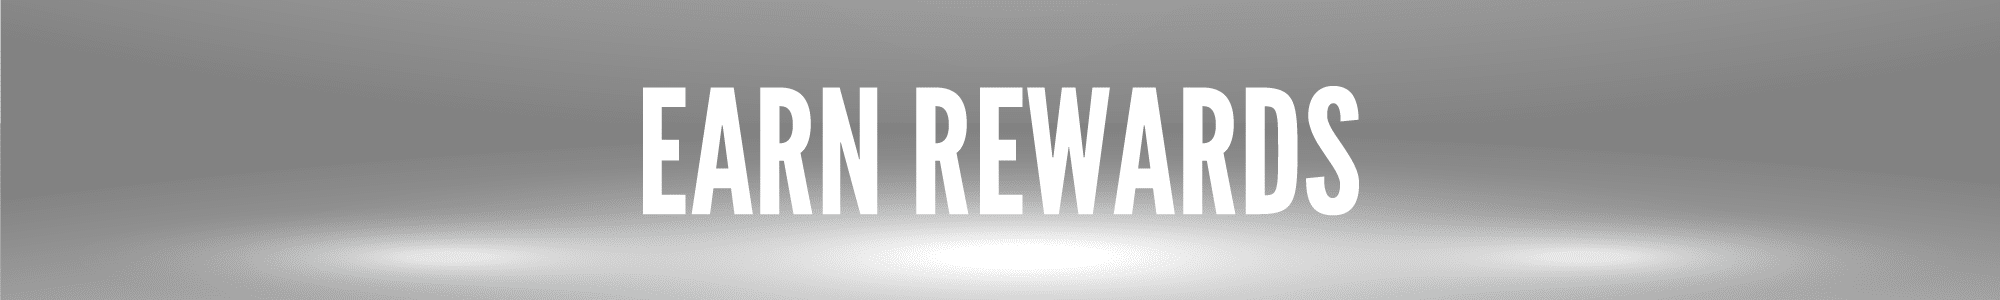 Rewards banner image